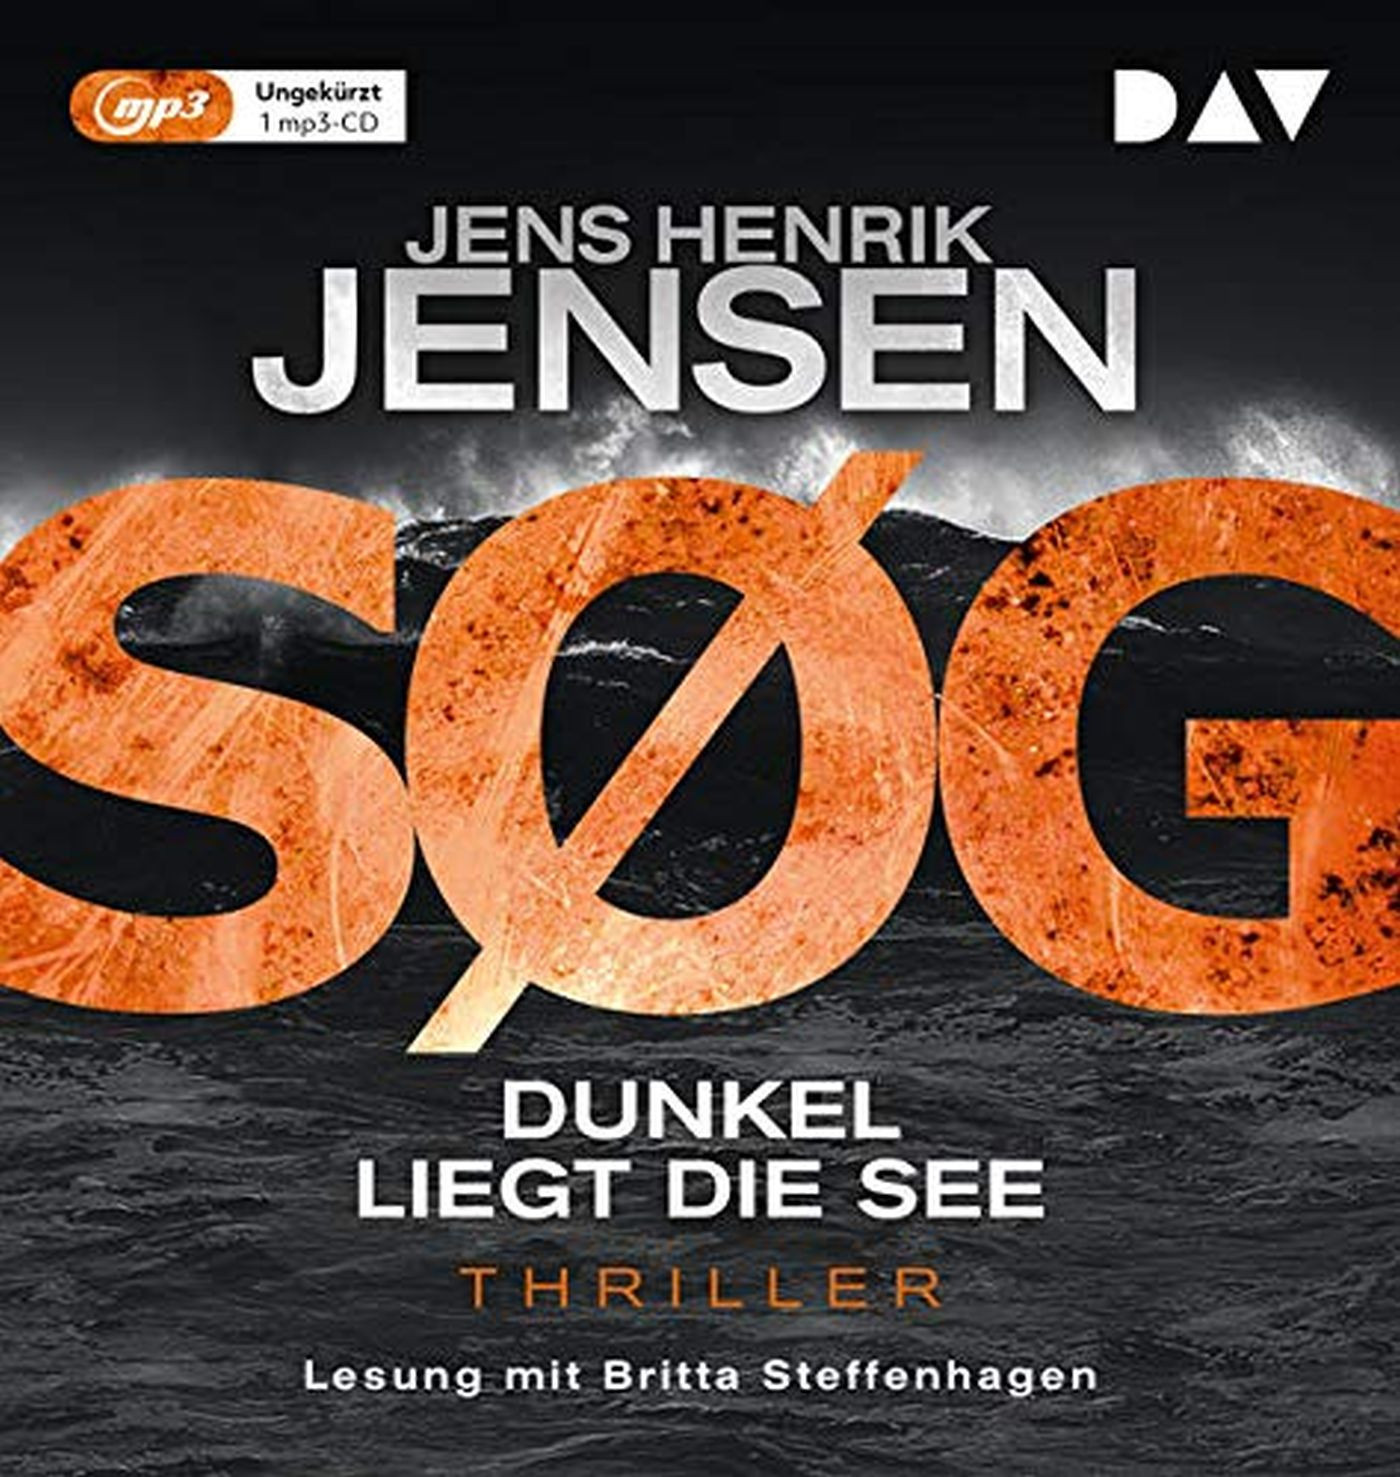 Jens Henrik Jensen - SØG. Dunkel liegt die See